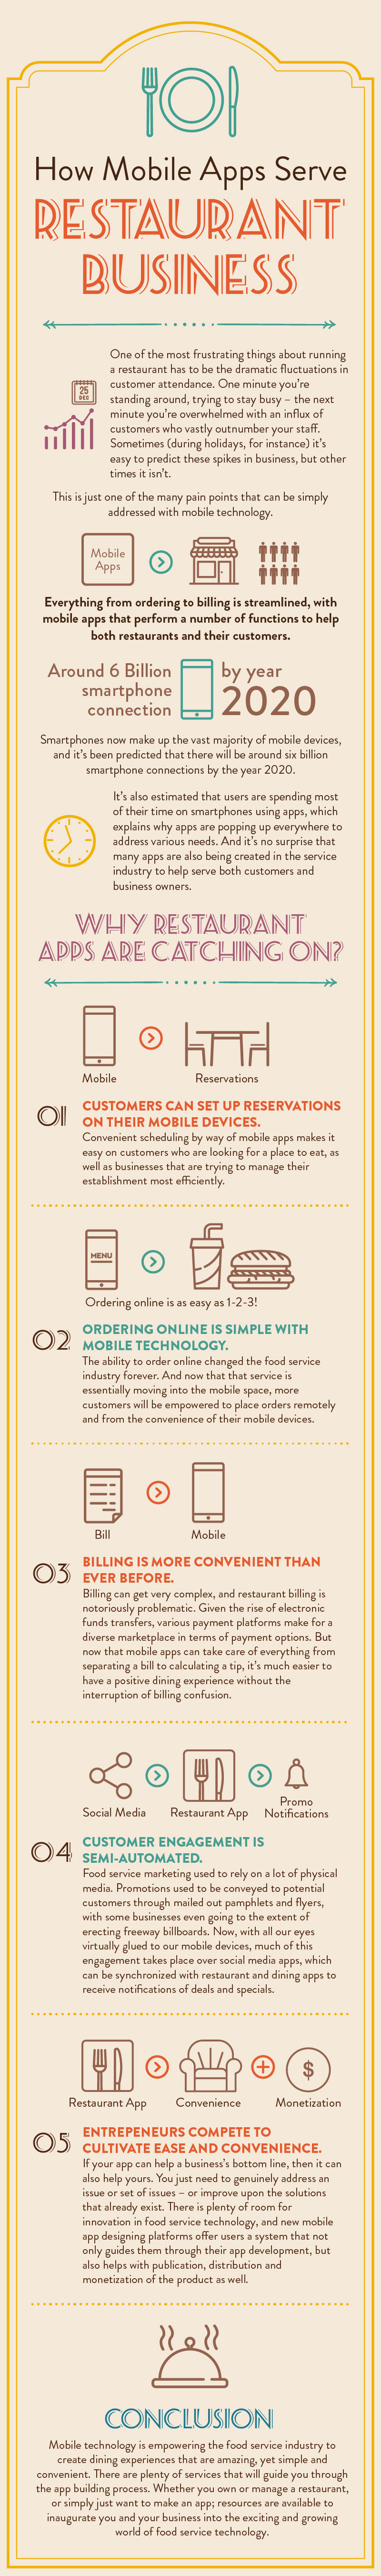 cnyapps-mobile-apps-helping-restaurants-blog-600-400